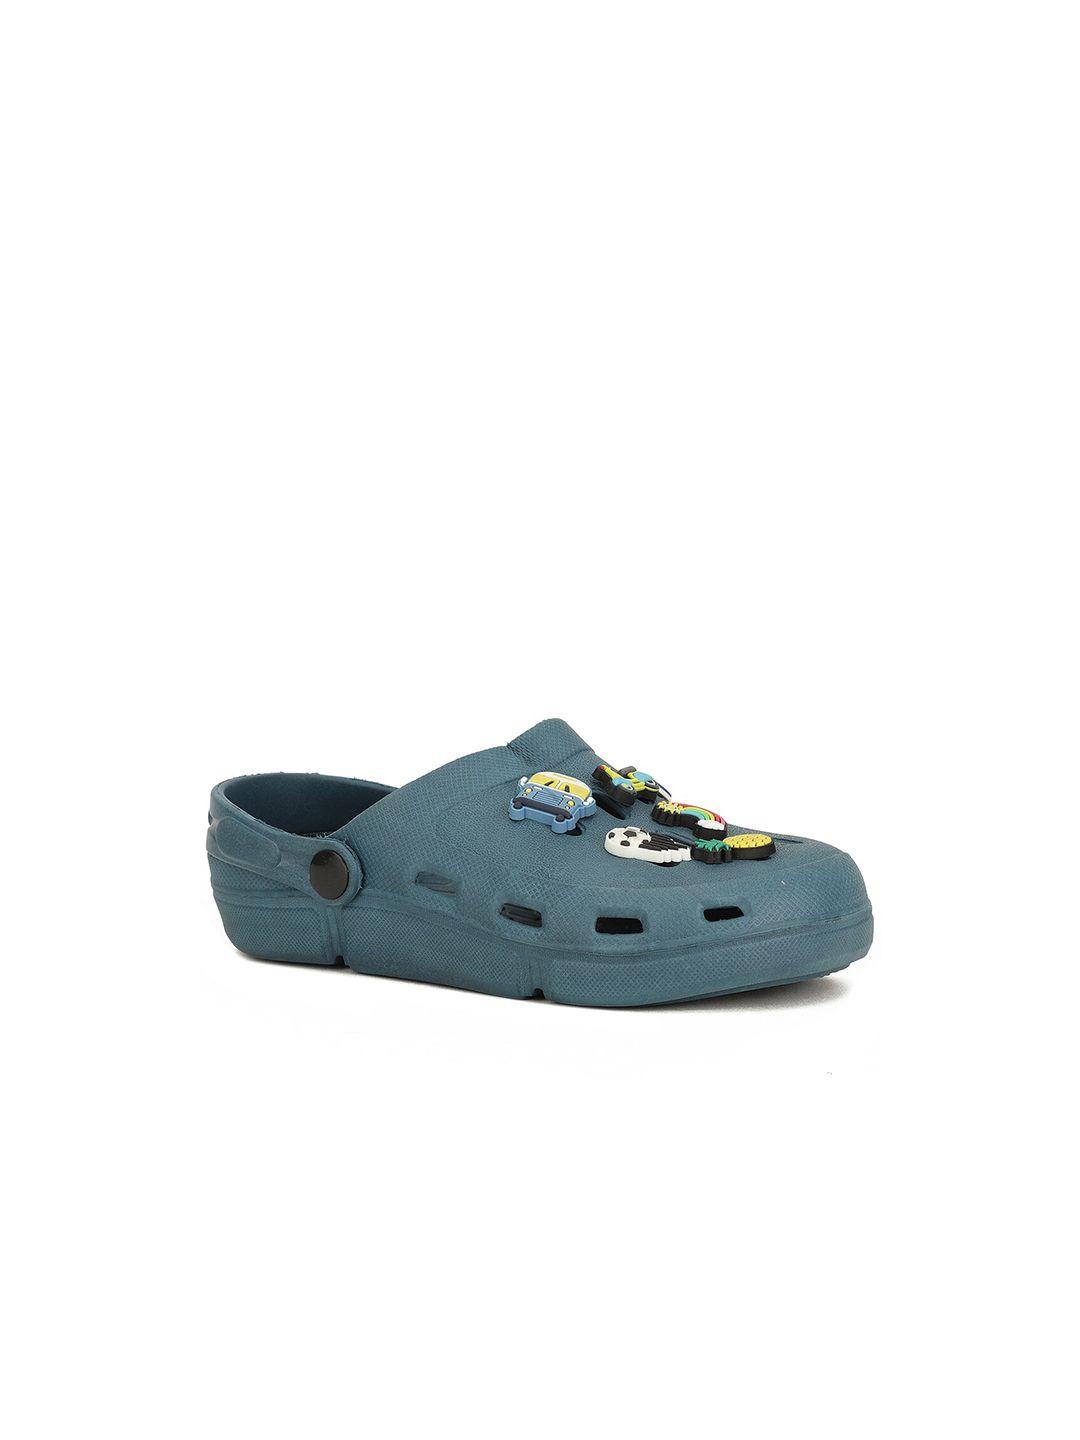 bata boys navy blue clogs sandals